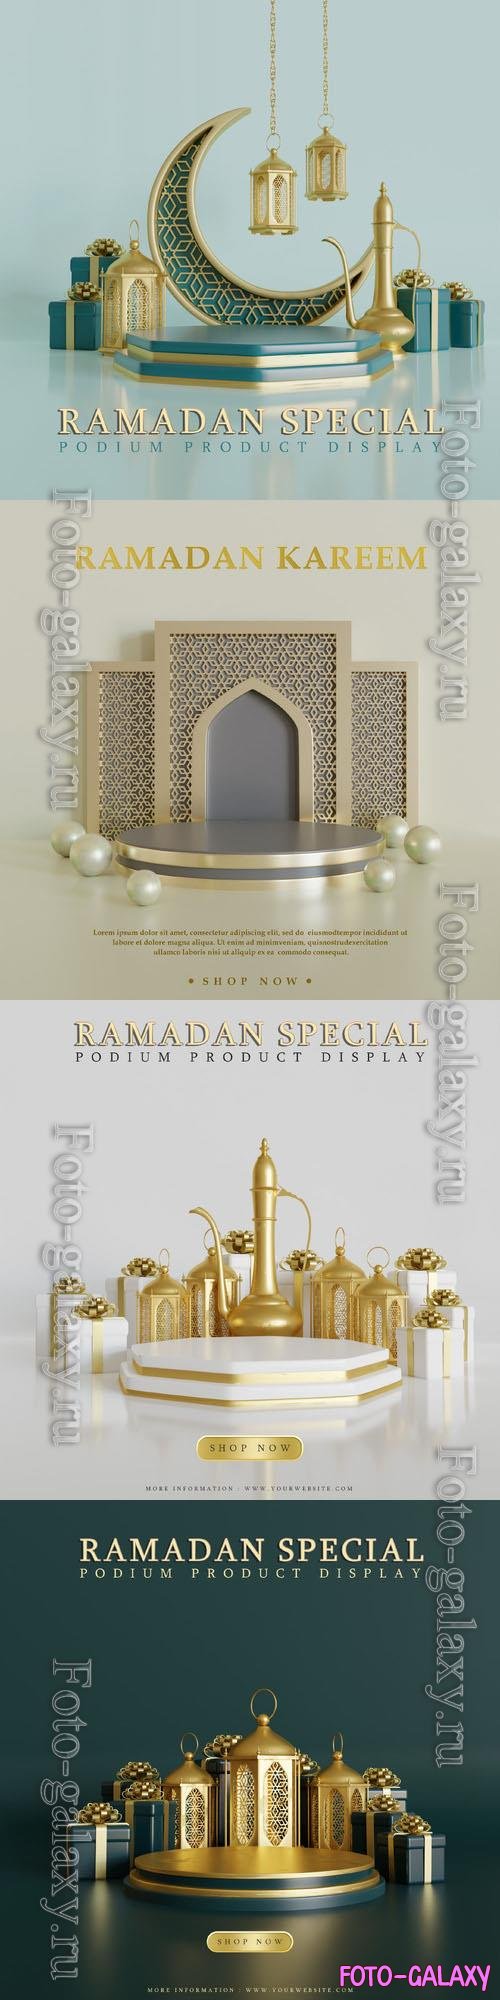 PSD premium luxury ramadan podium